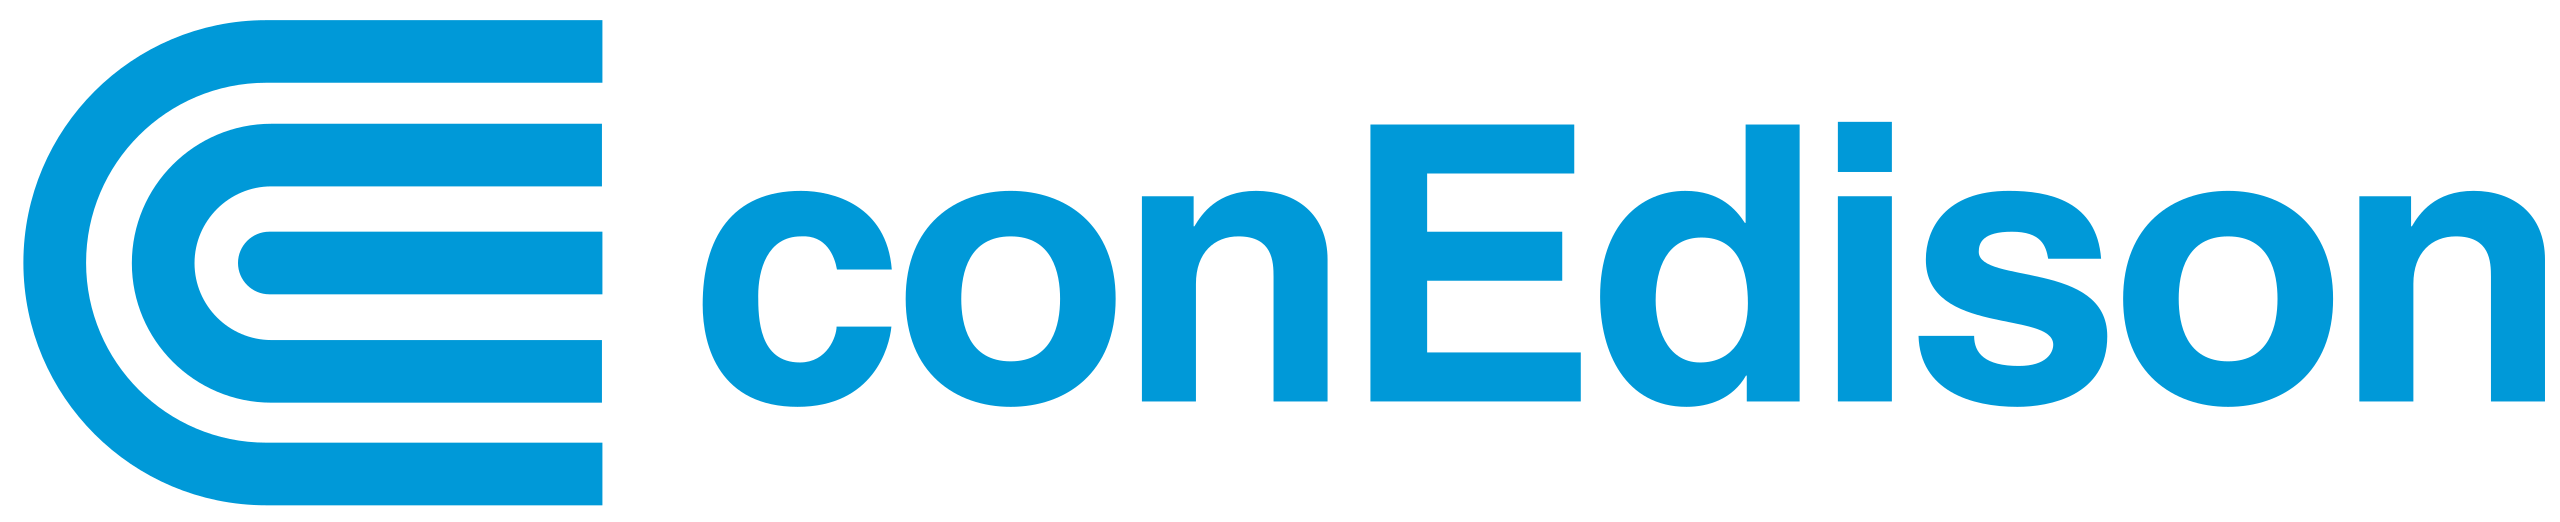 ConEd_logo